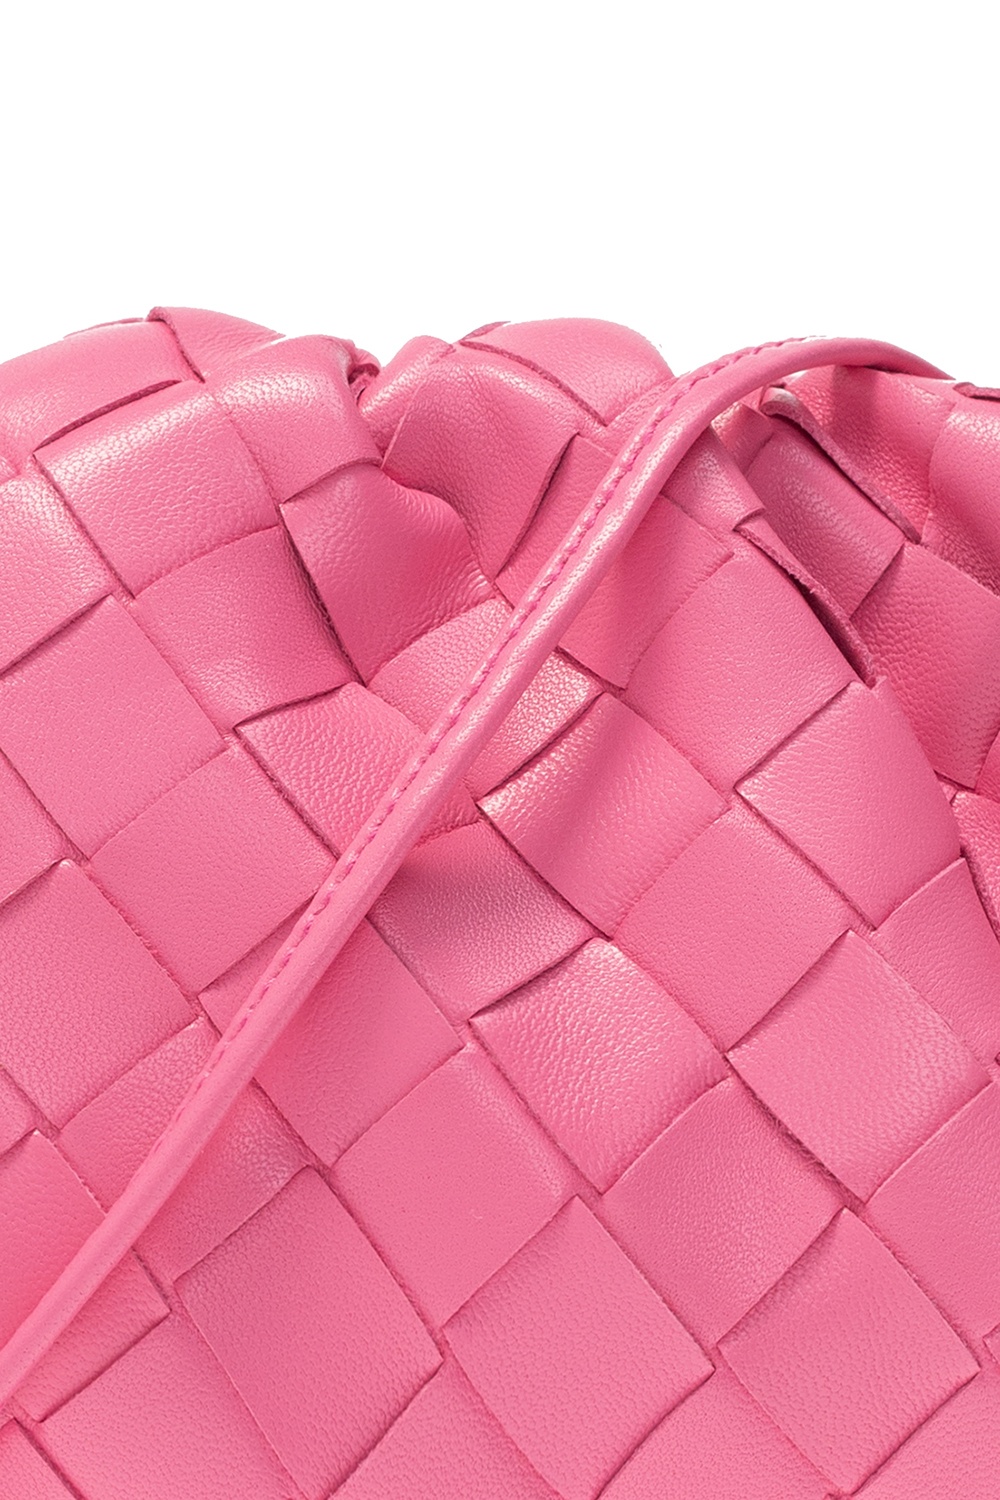 Bottega Veneta Mini - Pouch for Woman - Pink - 585852VCPP1-7671